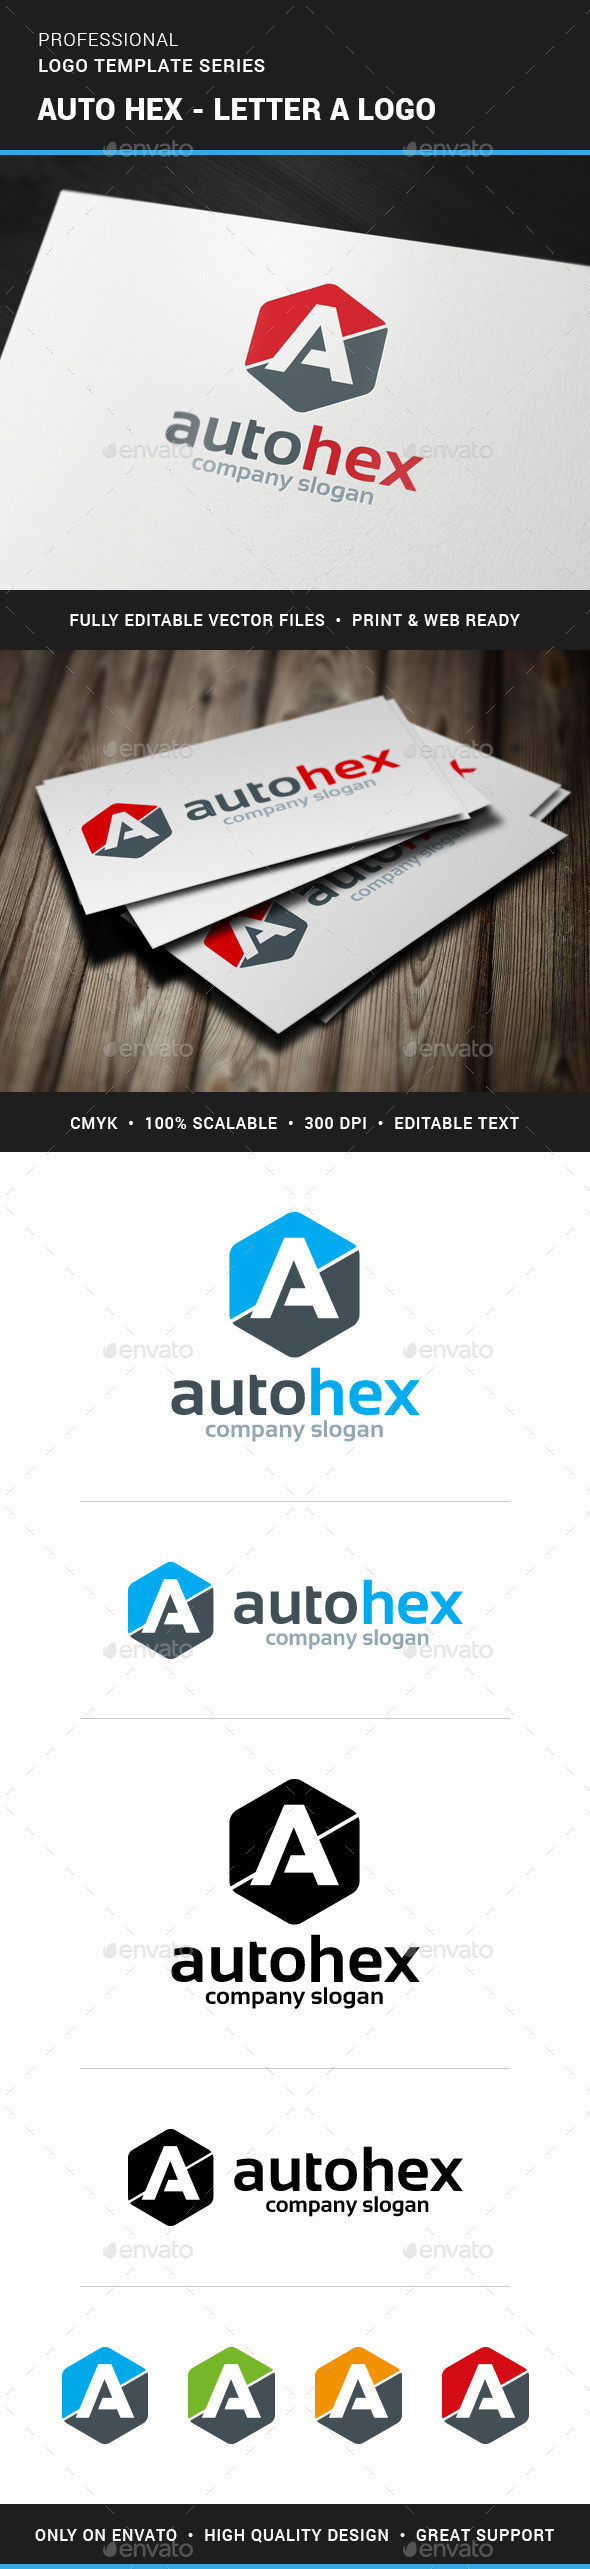 Auto hex letter a logo